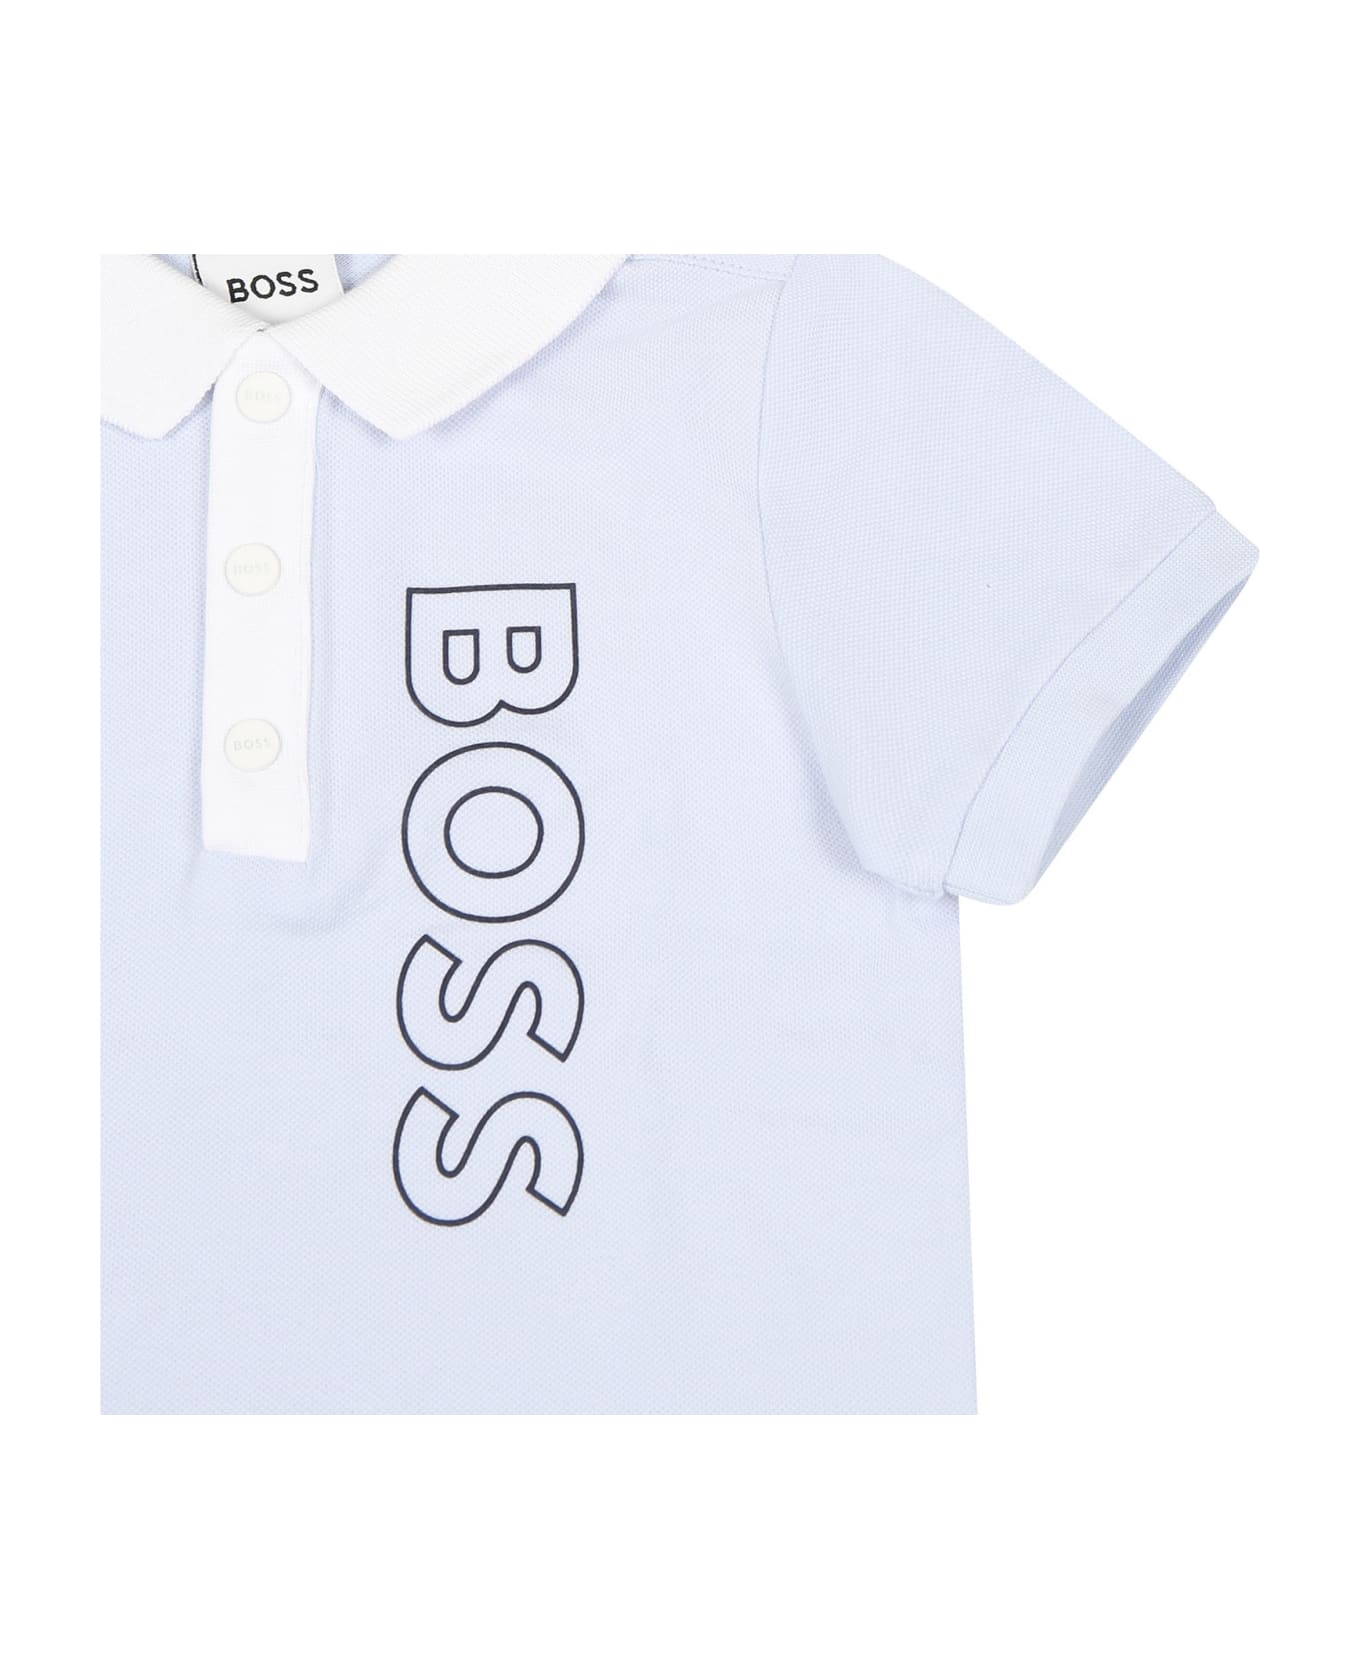 Hugo Boss Light Blue Suit For Baby Oy With Logo - Light Blue